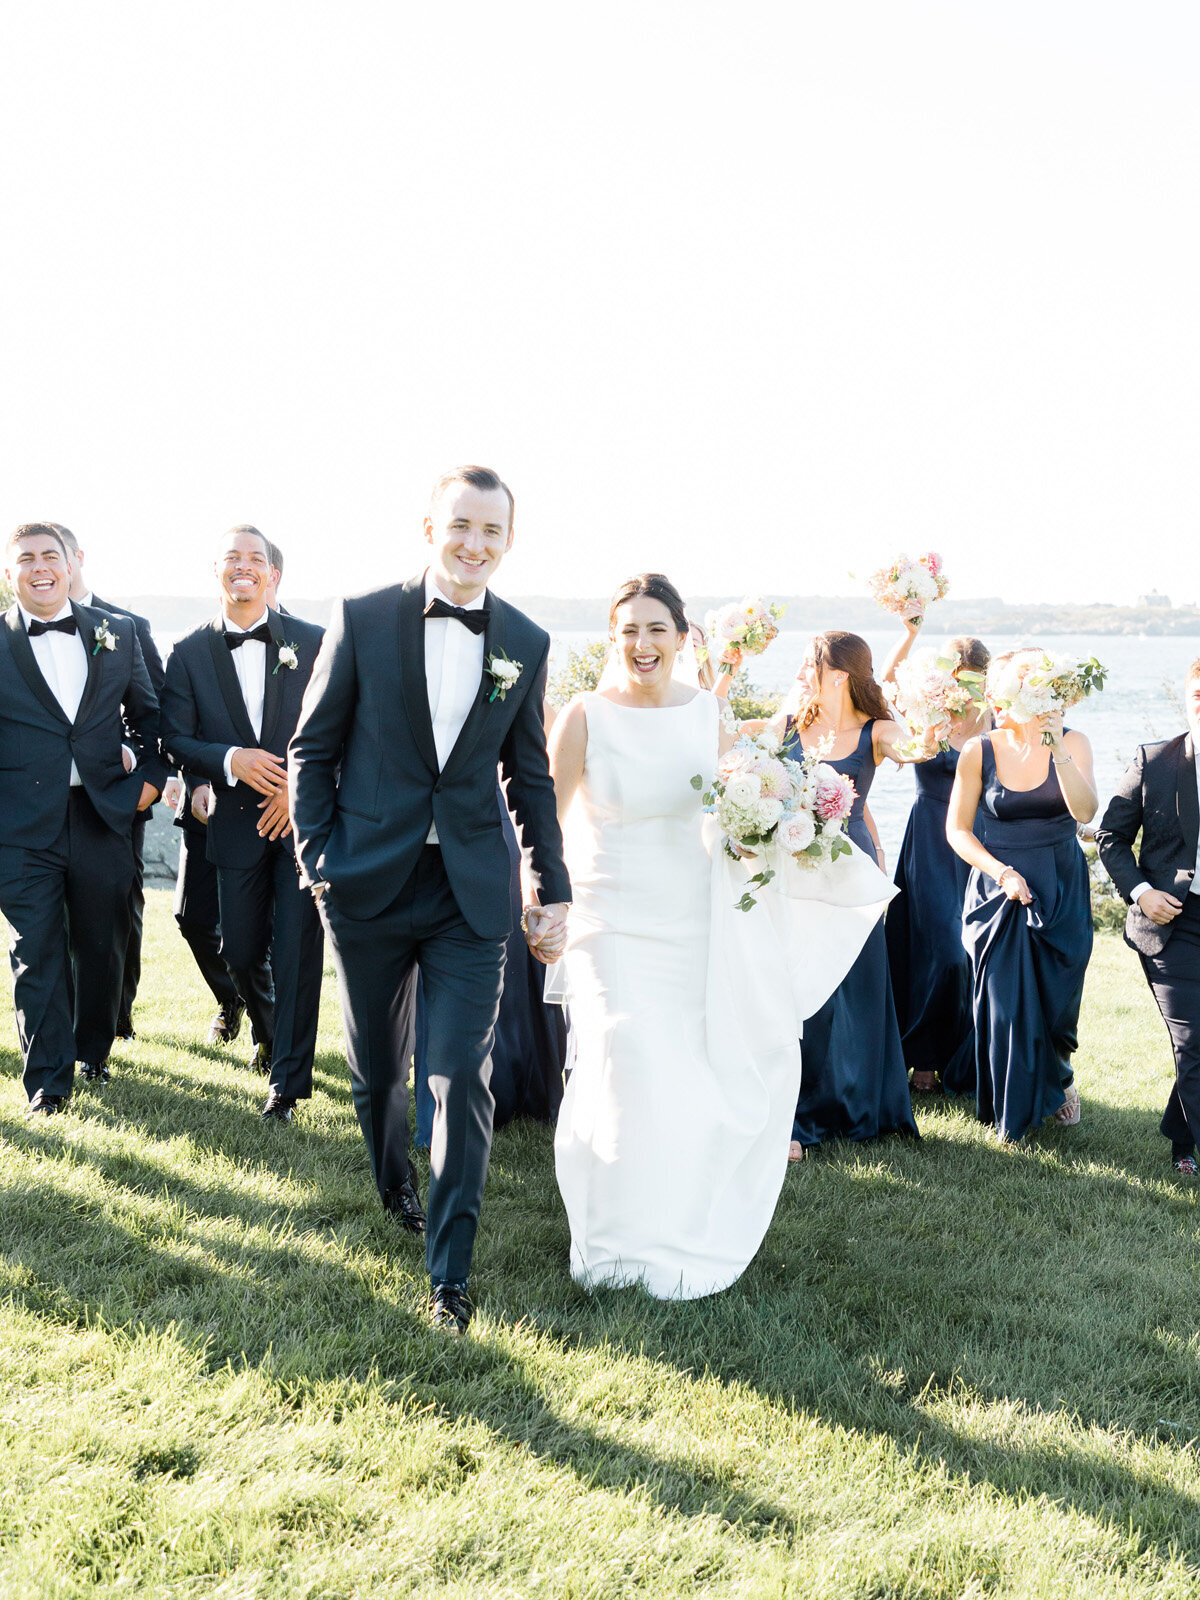 Kate-Murtaugh-Events-Castle-Hill-Inn-Newport-wedding-bride-groom-navy-blue-bridesmaids-groomsmen